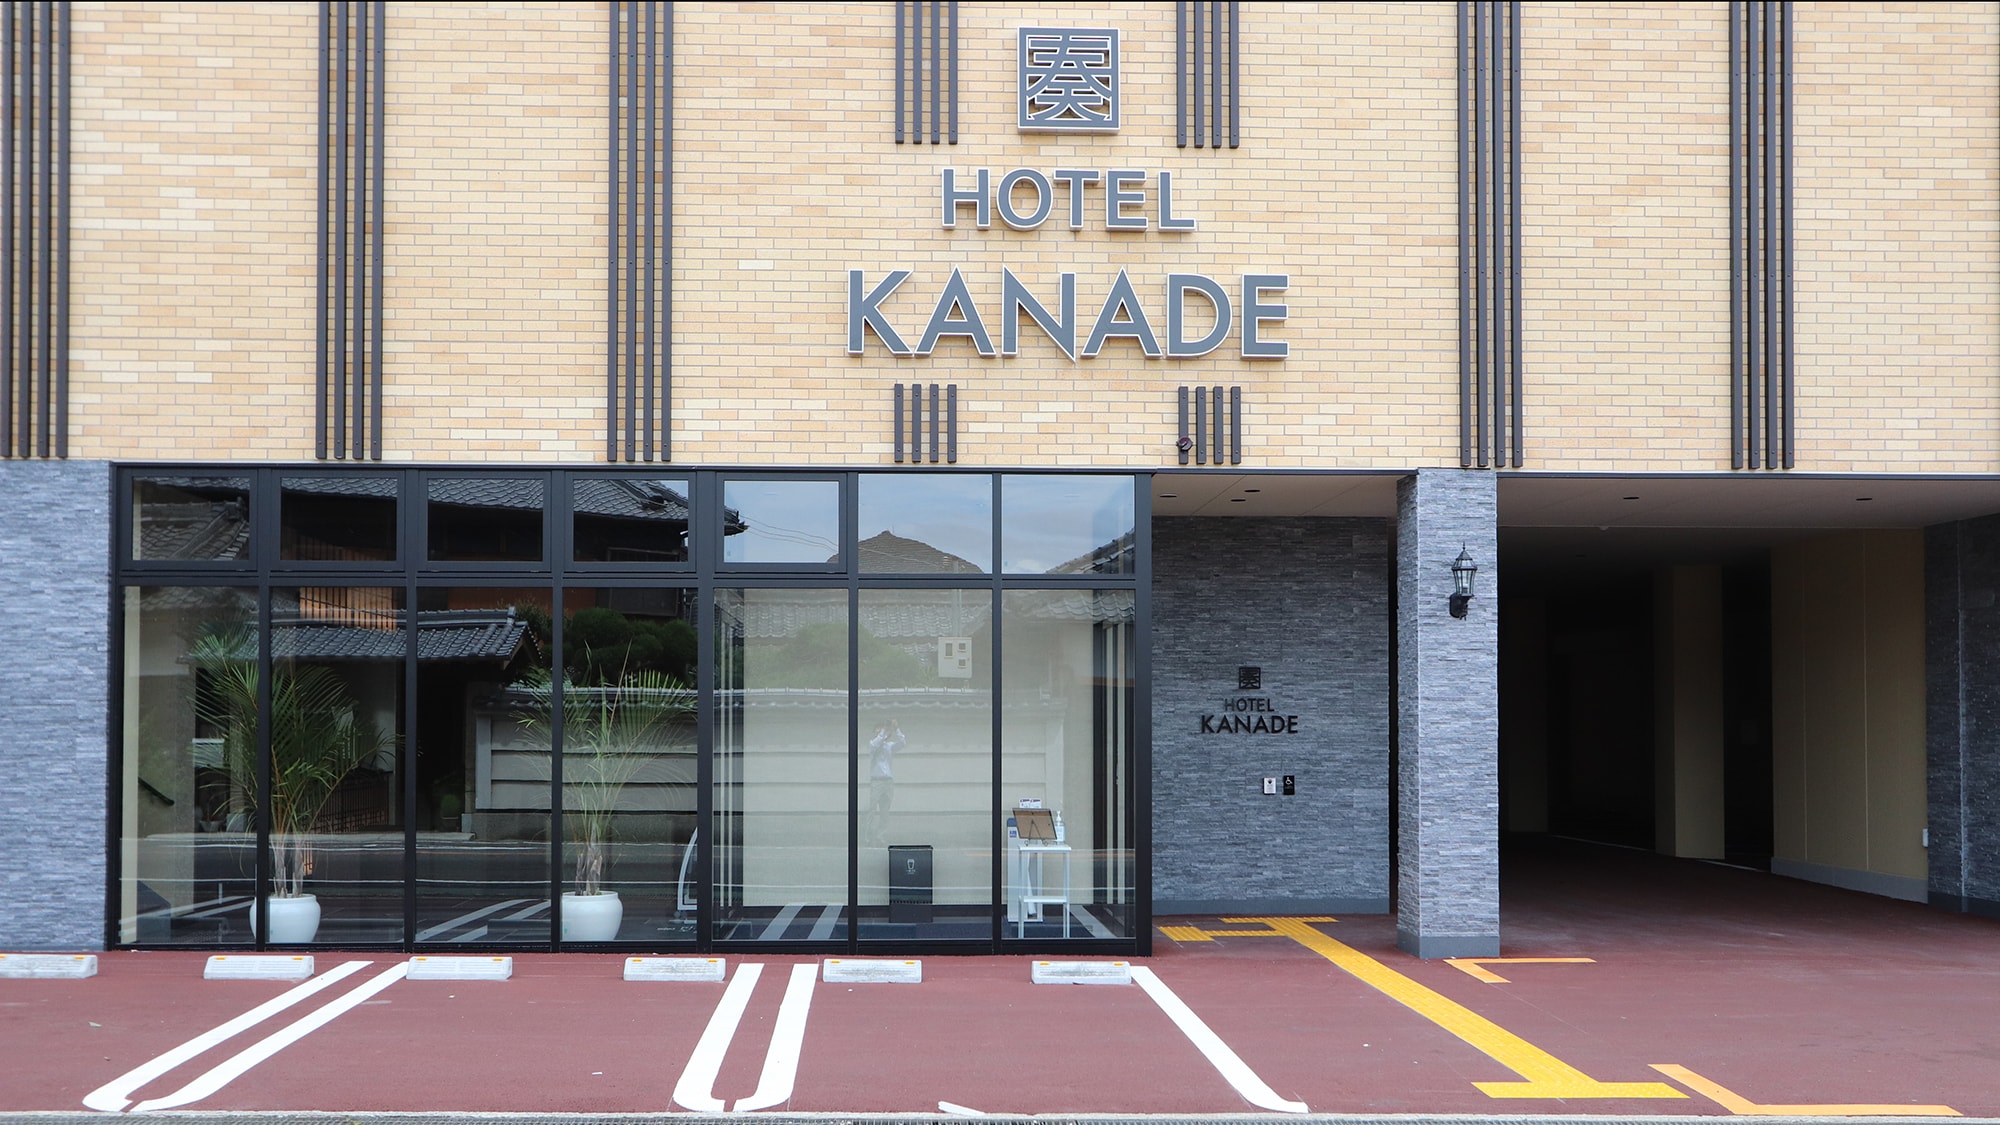 HOTEL KANADE Kanku Shell Mound will open on June 5, 2020 (Friday) ♪